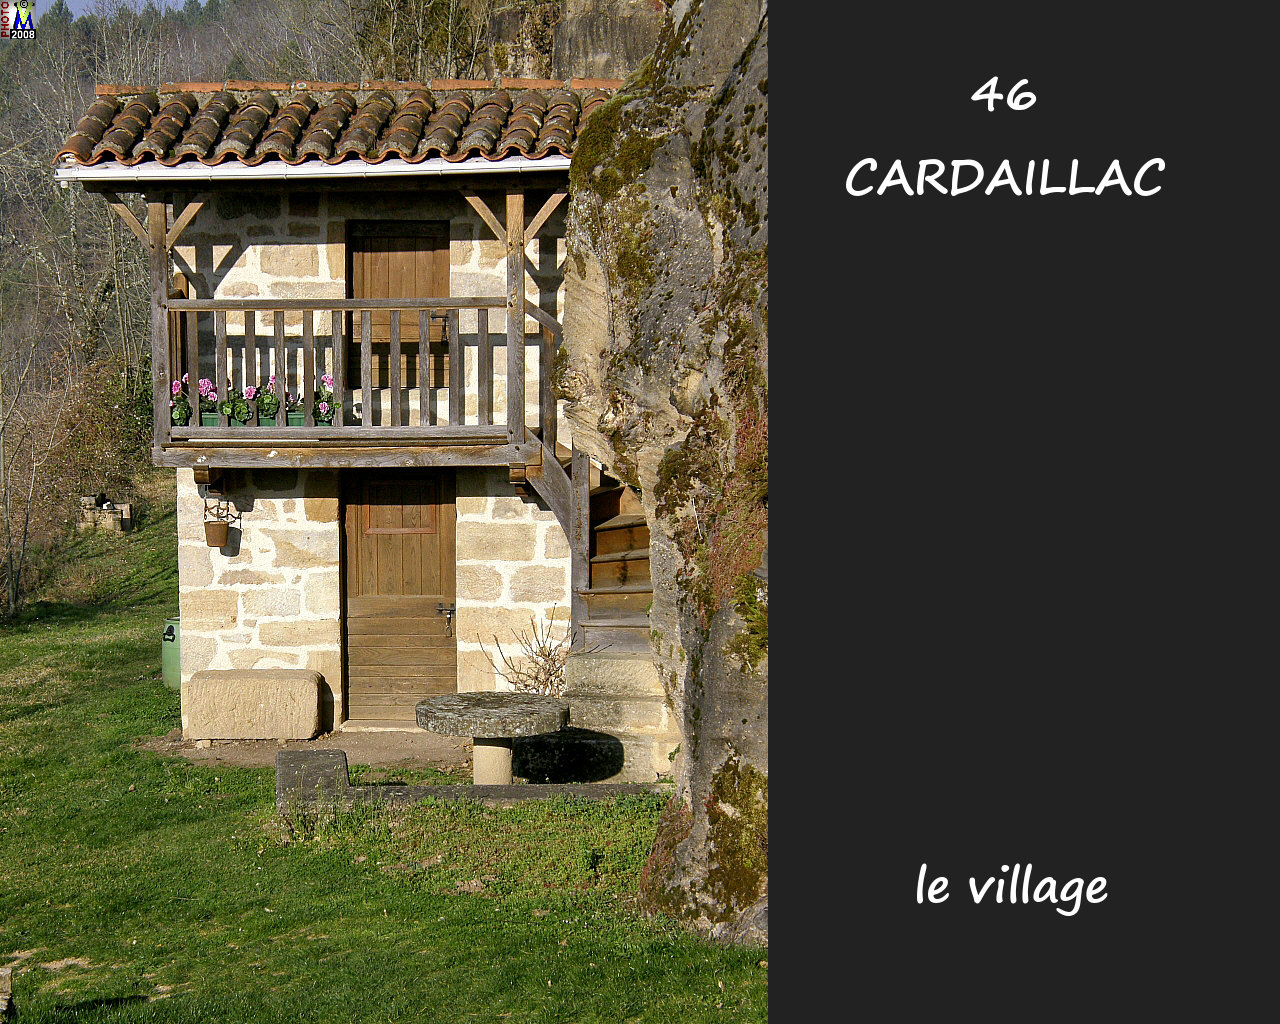 46CARDAILLAC_village_136.jpg